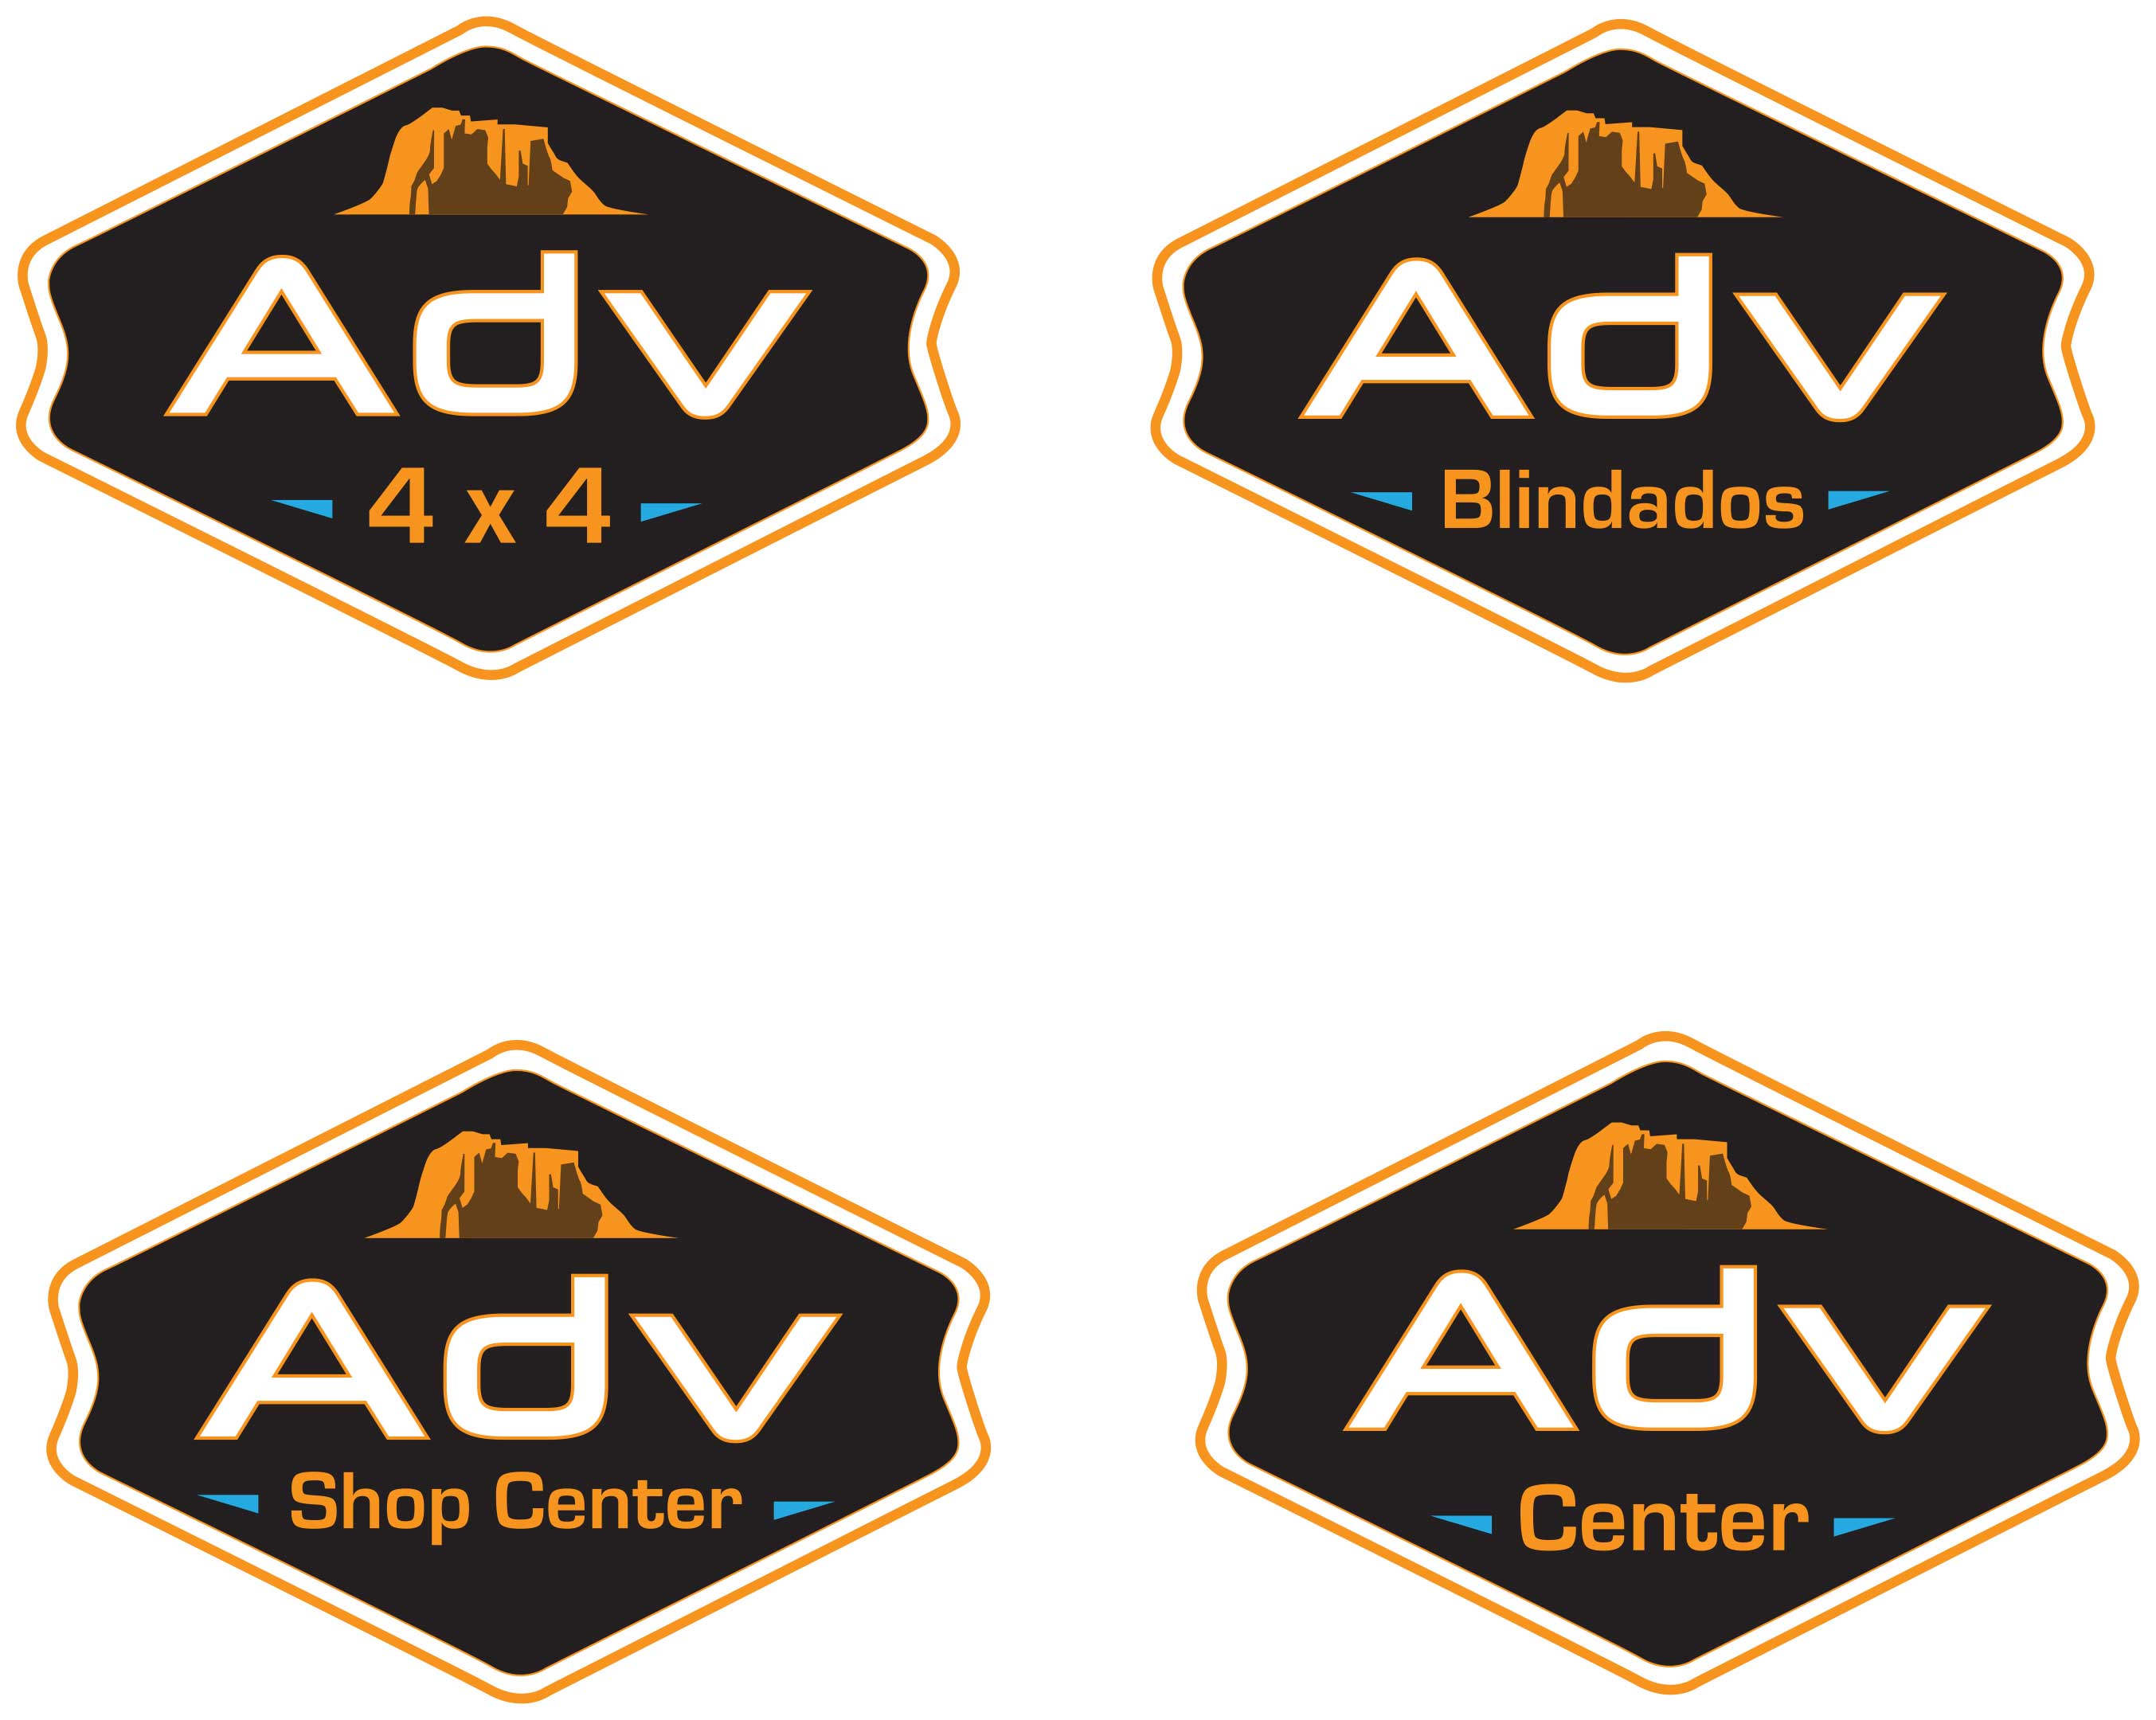 Adv Logo - ADV Armored | Peterssendesign.com